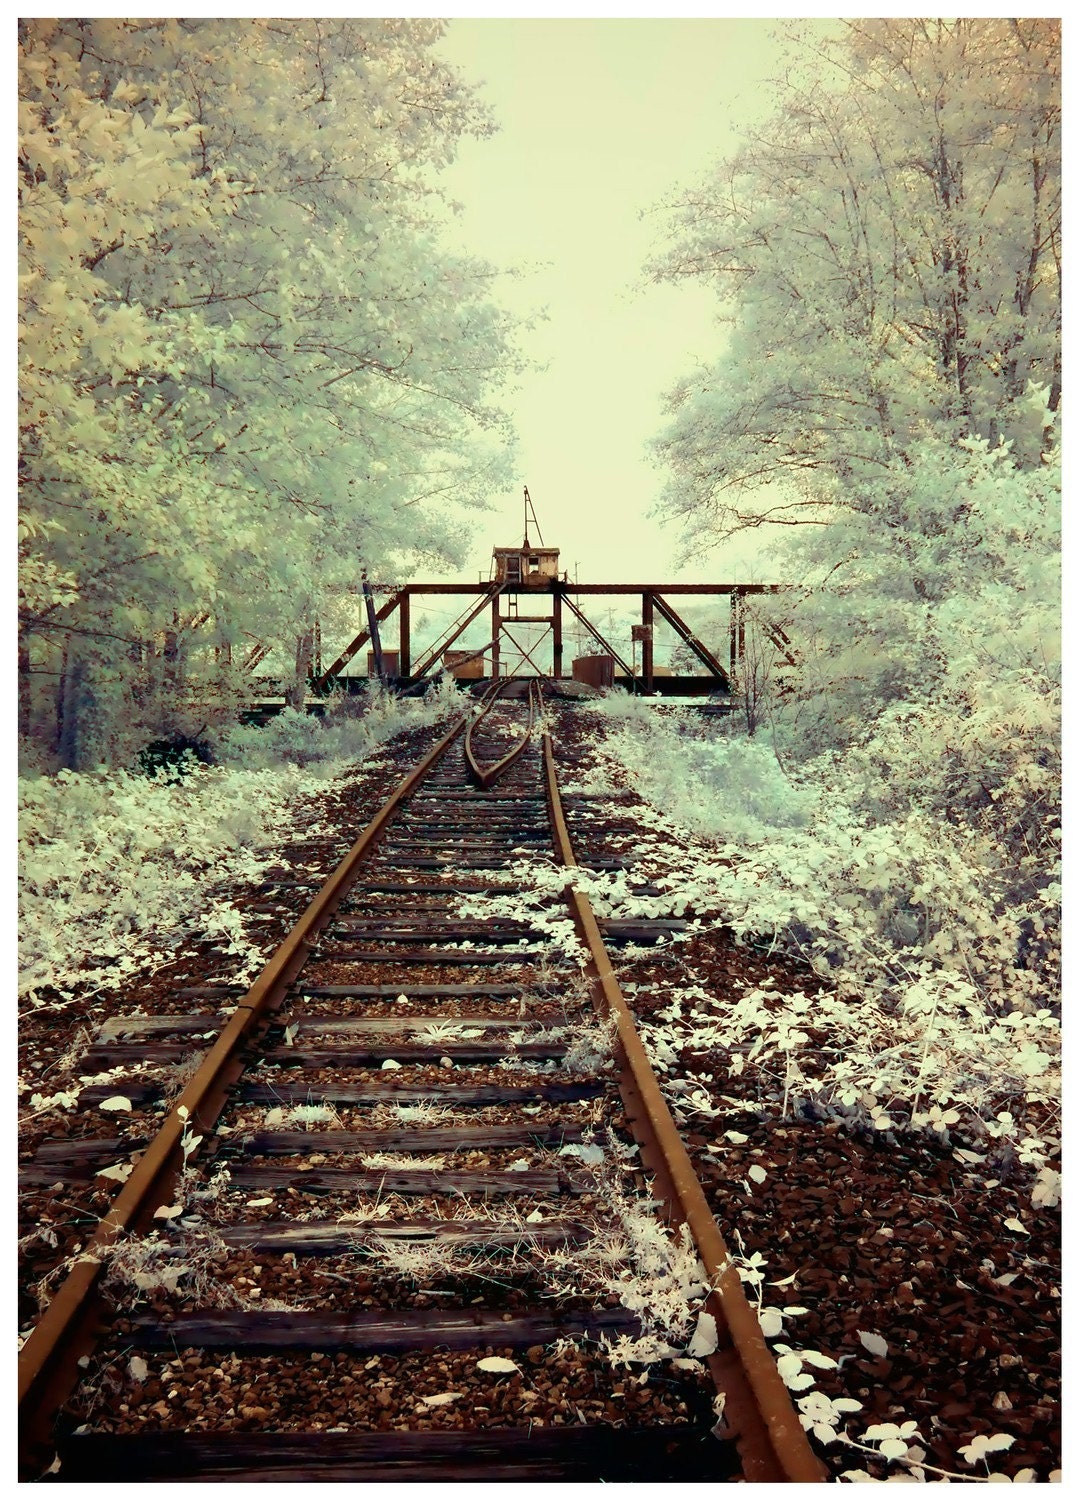 Old Train Bridge - infrared photographic print by Kevan Moran Aponte